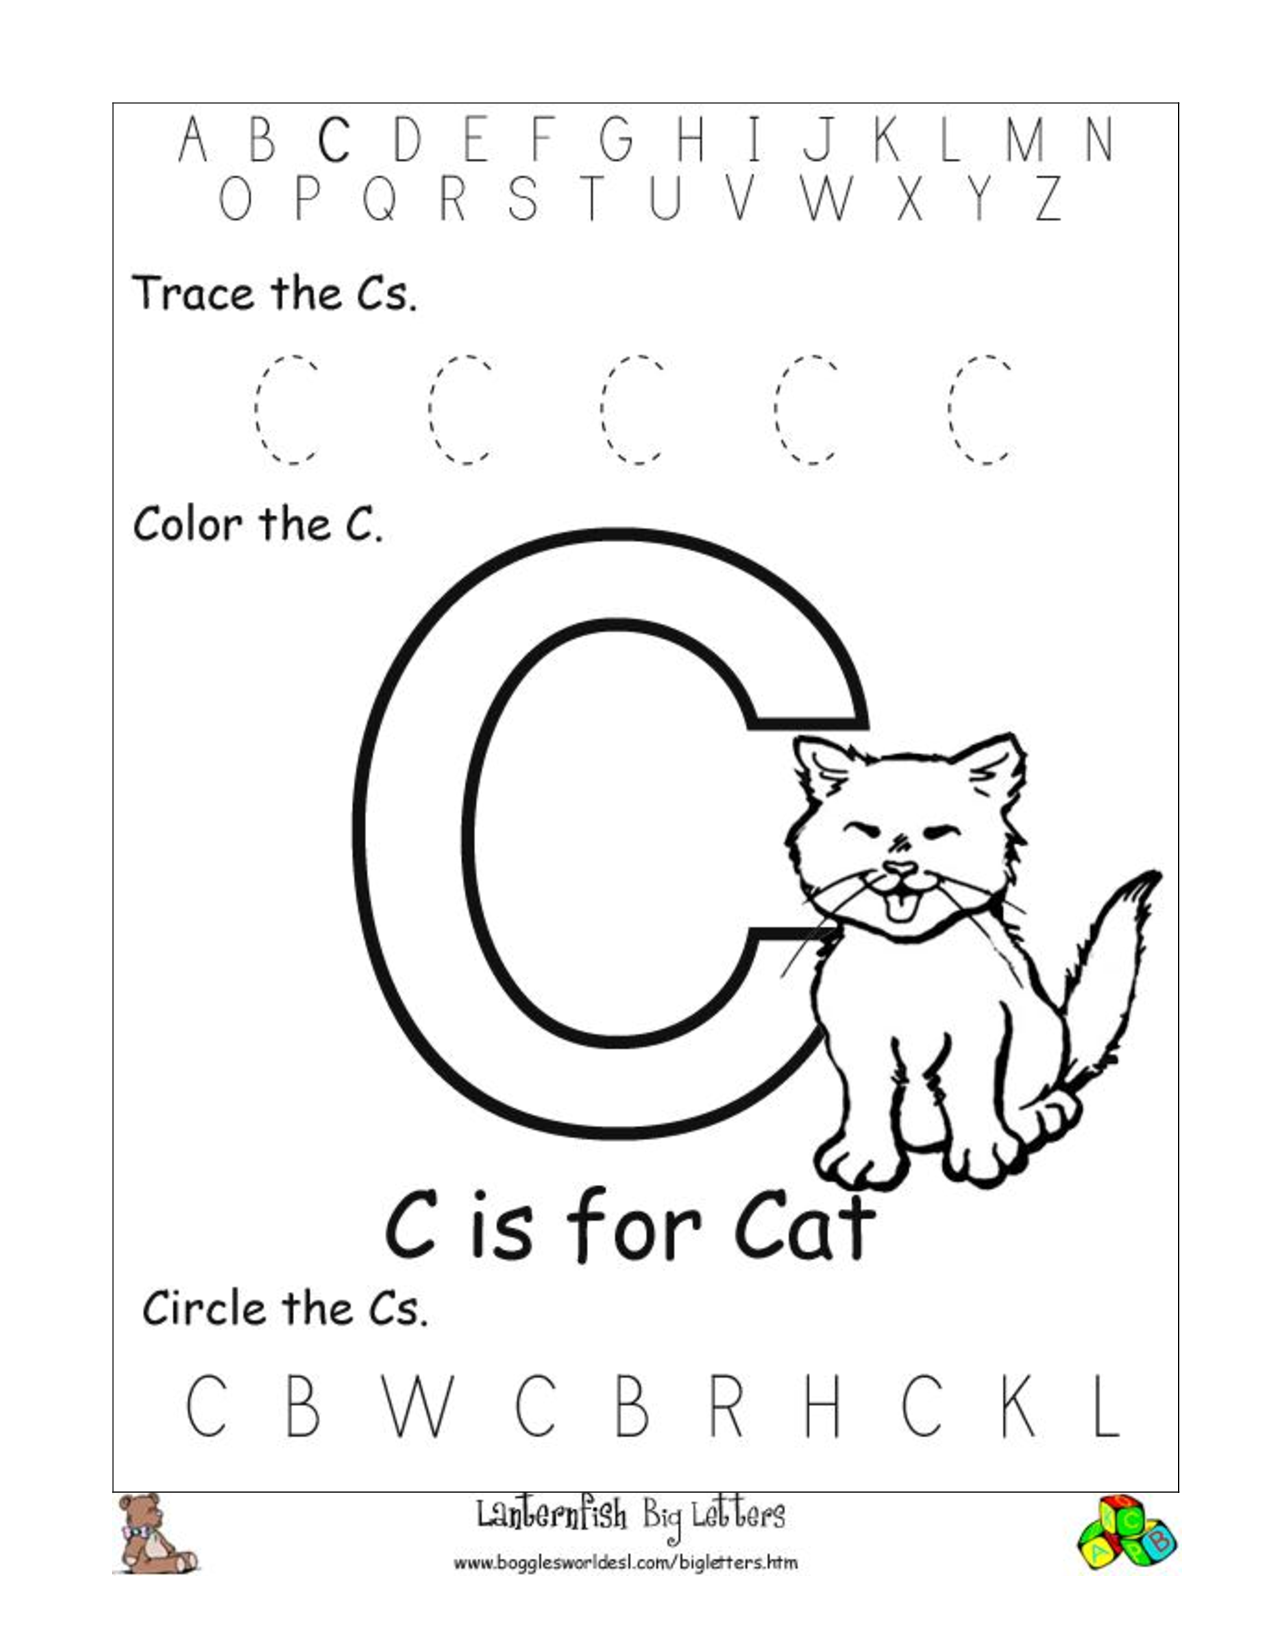 10 Best Images of Letter C Worksheets - Letter C Writing Practice ...